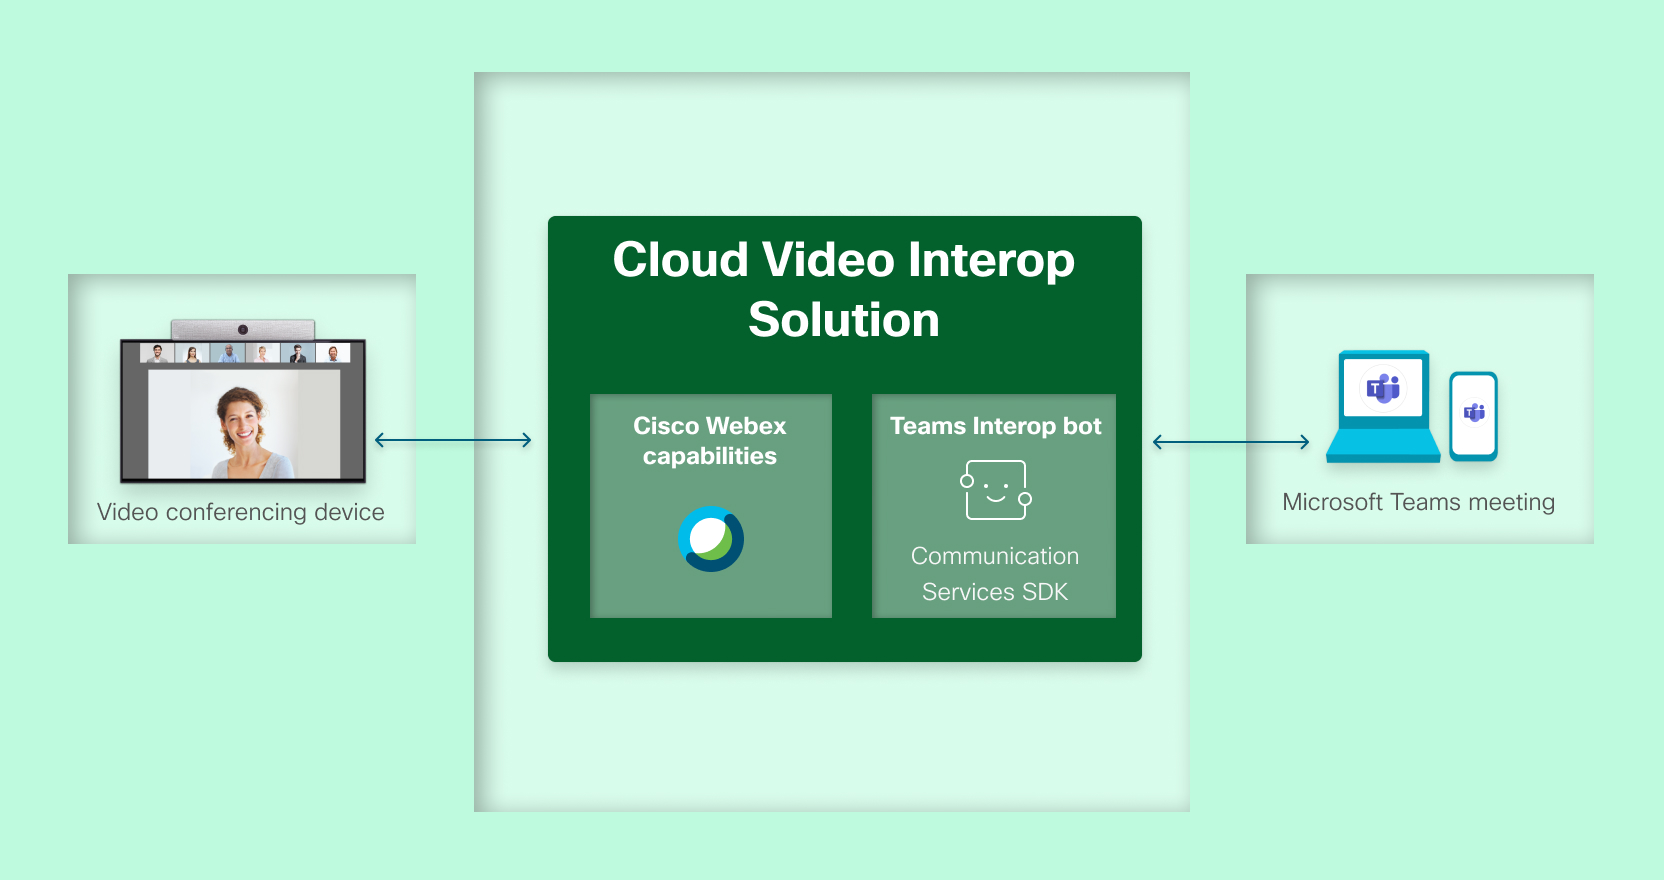 CVI arhitektura predodžba na osnovi https://docs.microsoft.com/en-us/microsoftteams/cloud-video-interop